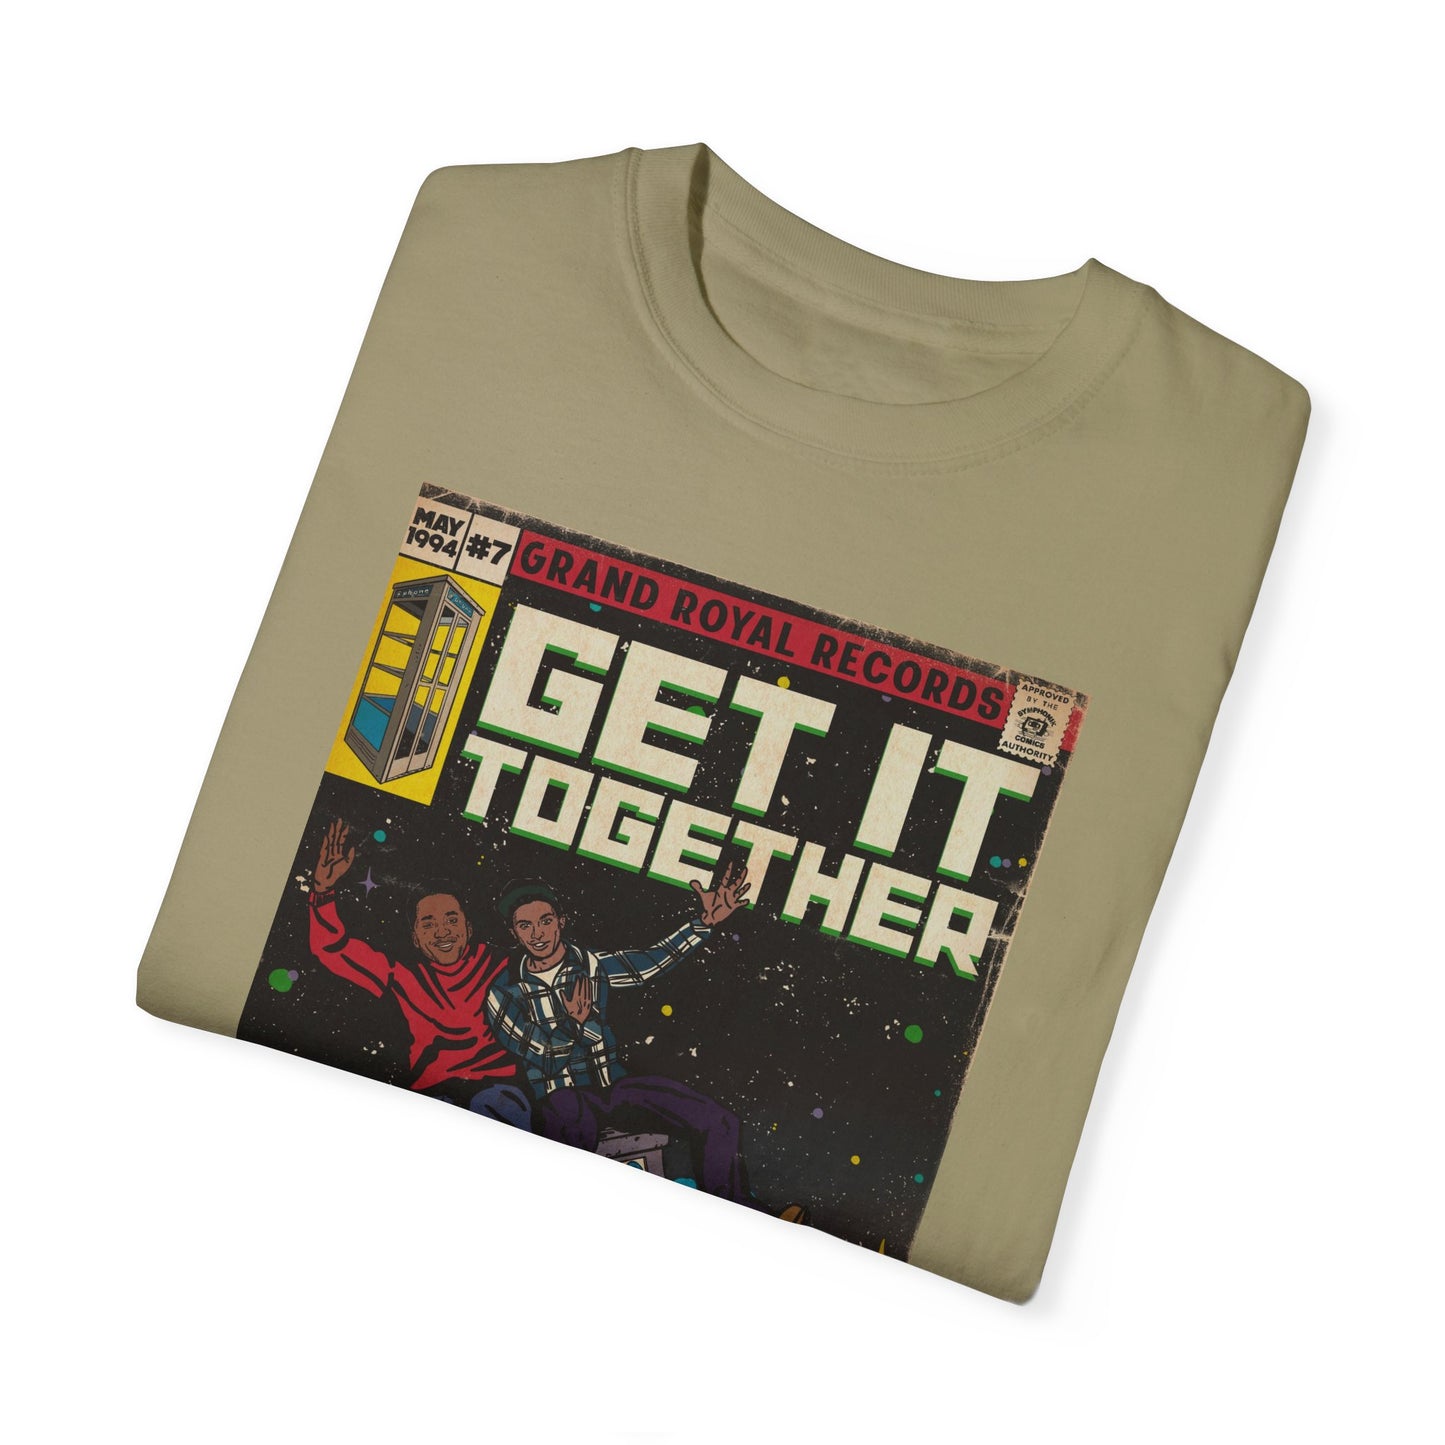 Beastie Boys & Q-Tip - Get it Together - Unisex Comfort Colors T-shirt